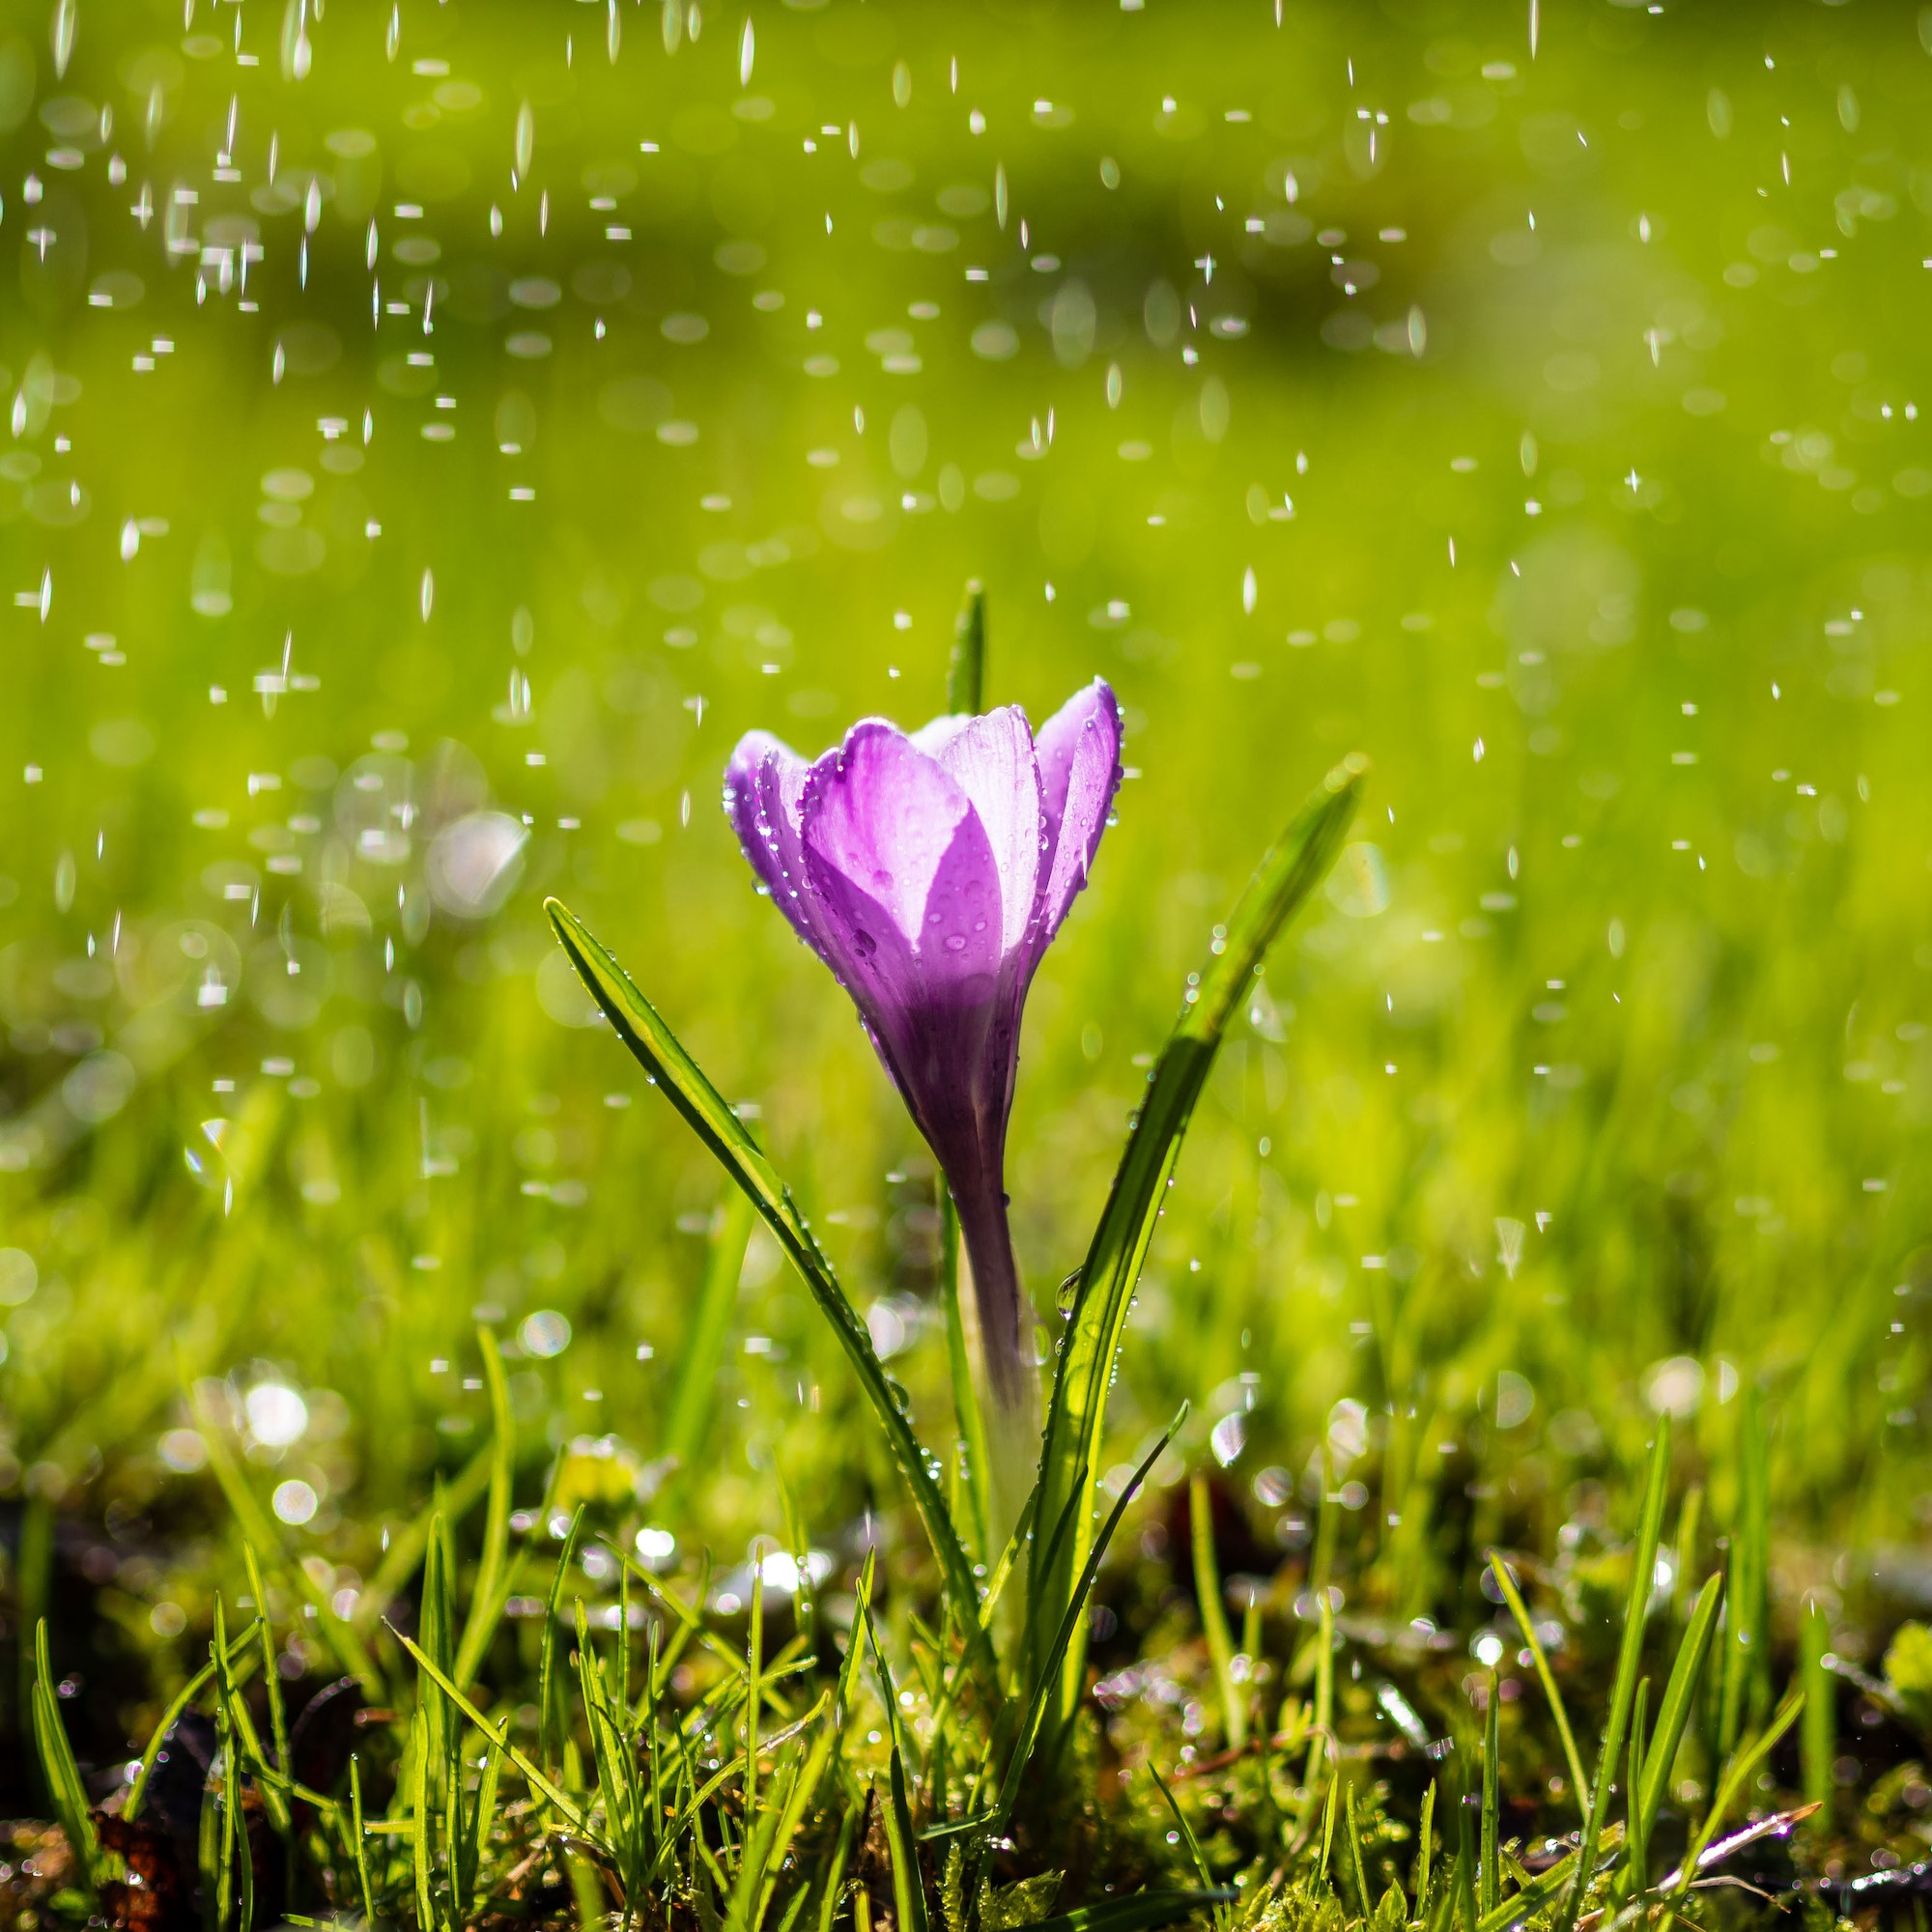 The single purple Crocus flower in drops of light summer rain